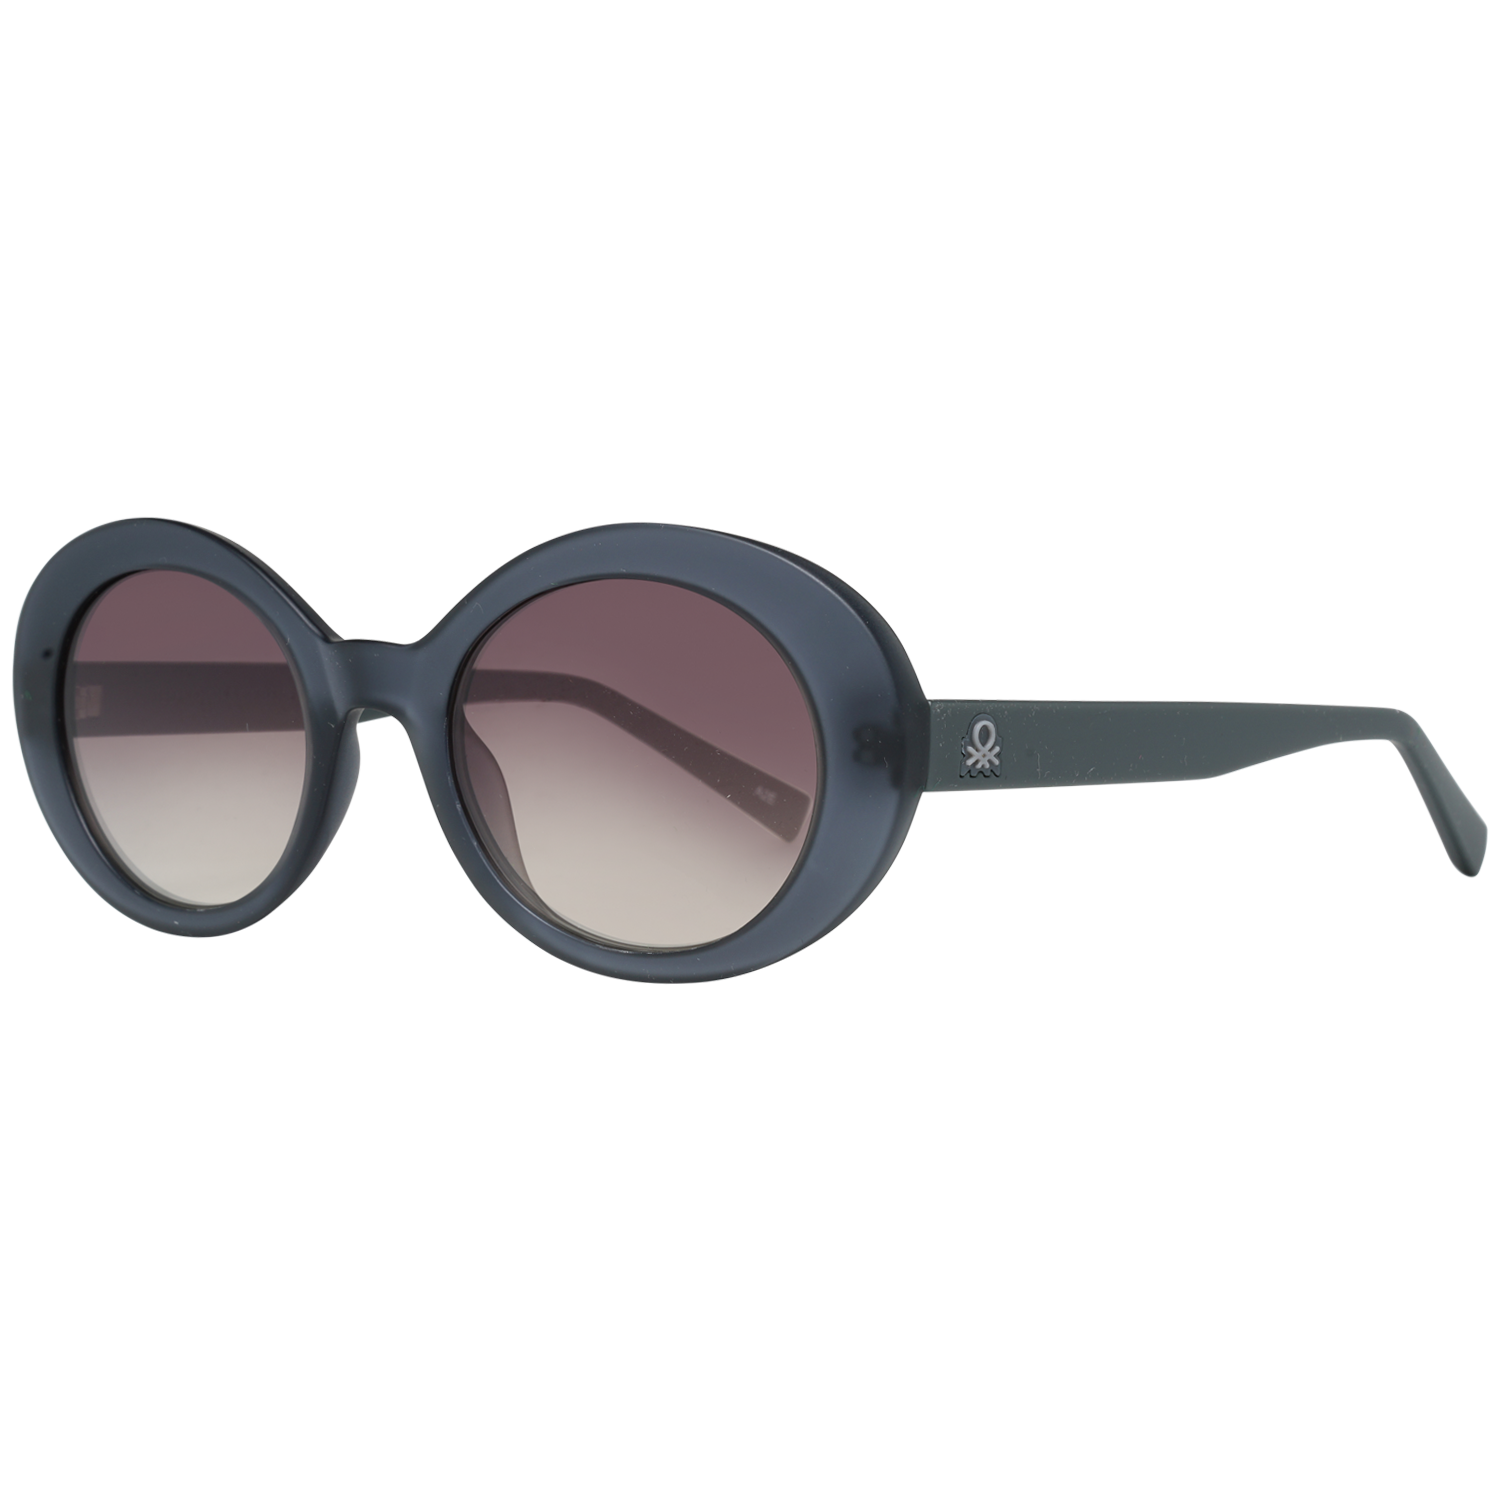 Benetton Sunglasses BE5006 921 50 Grey